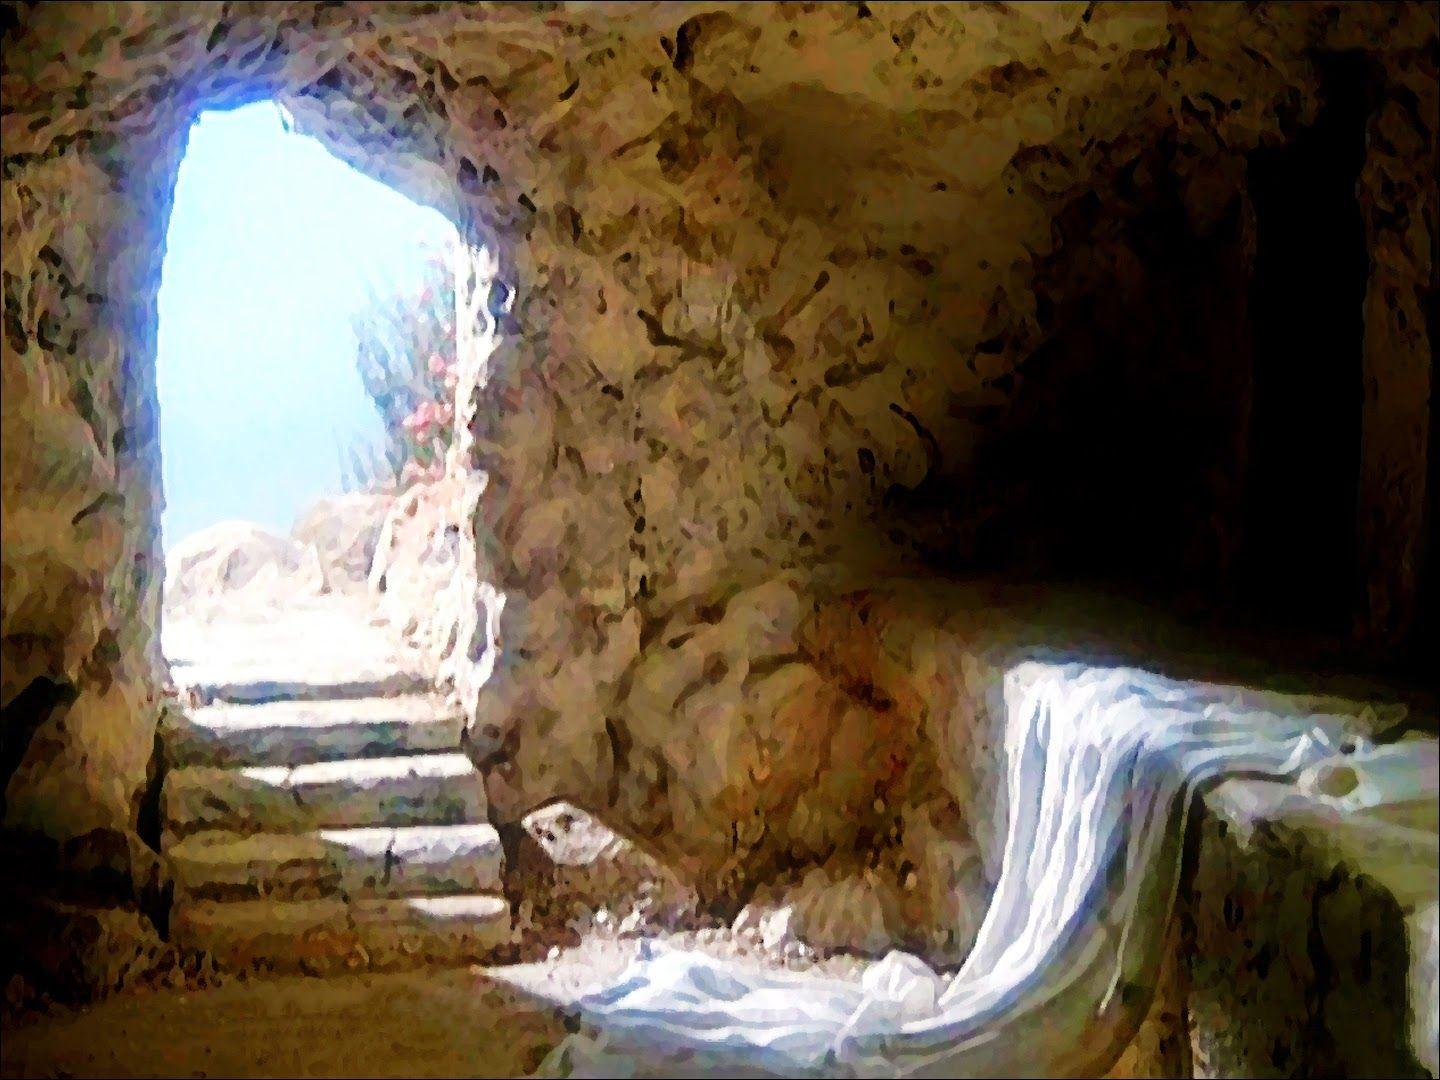 Acts 17: Did Jesus' Followers Hallucinate His Resurrection